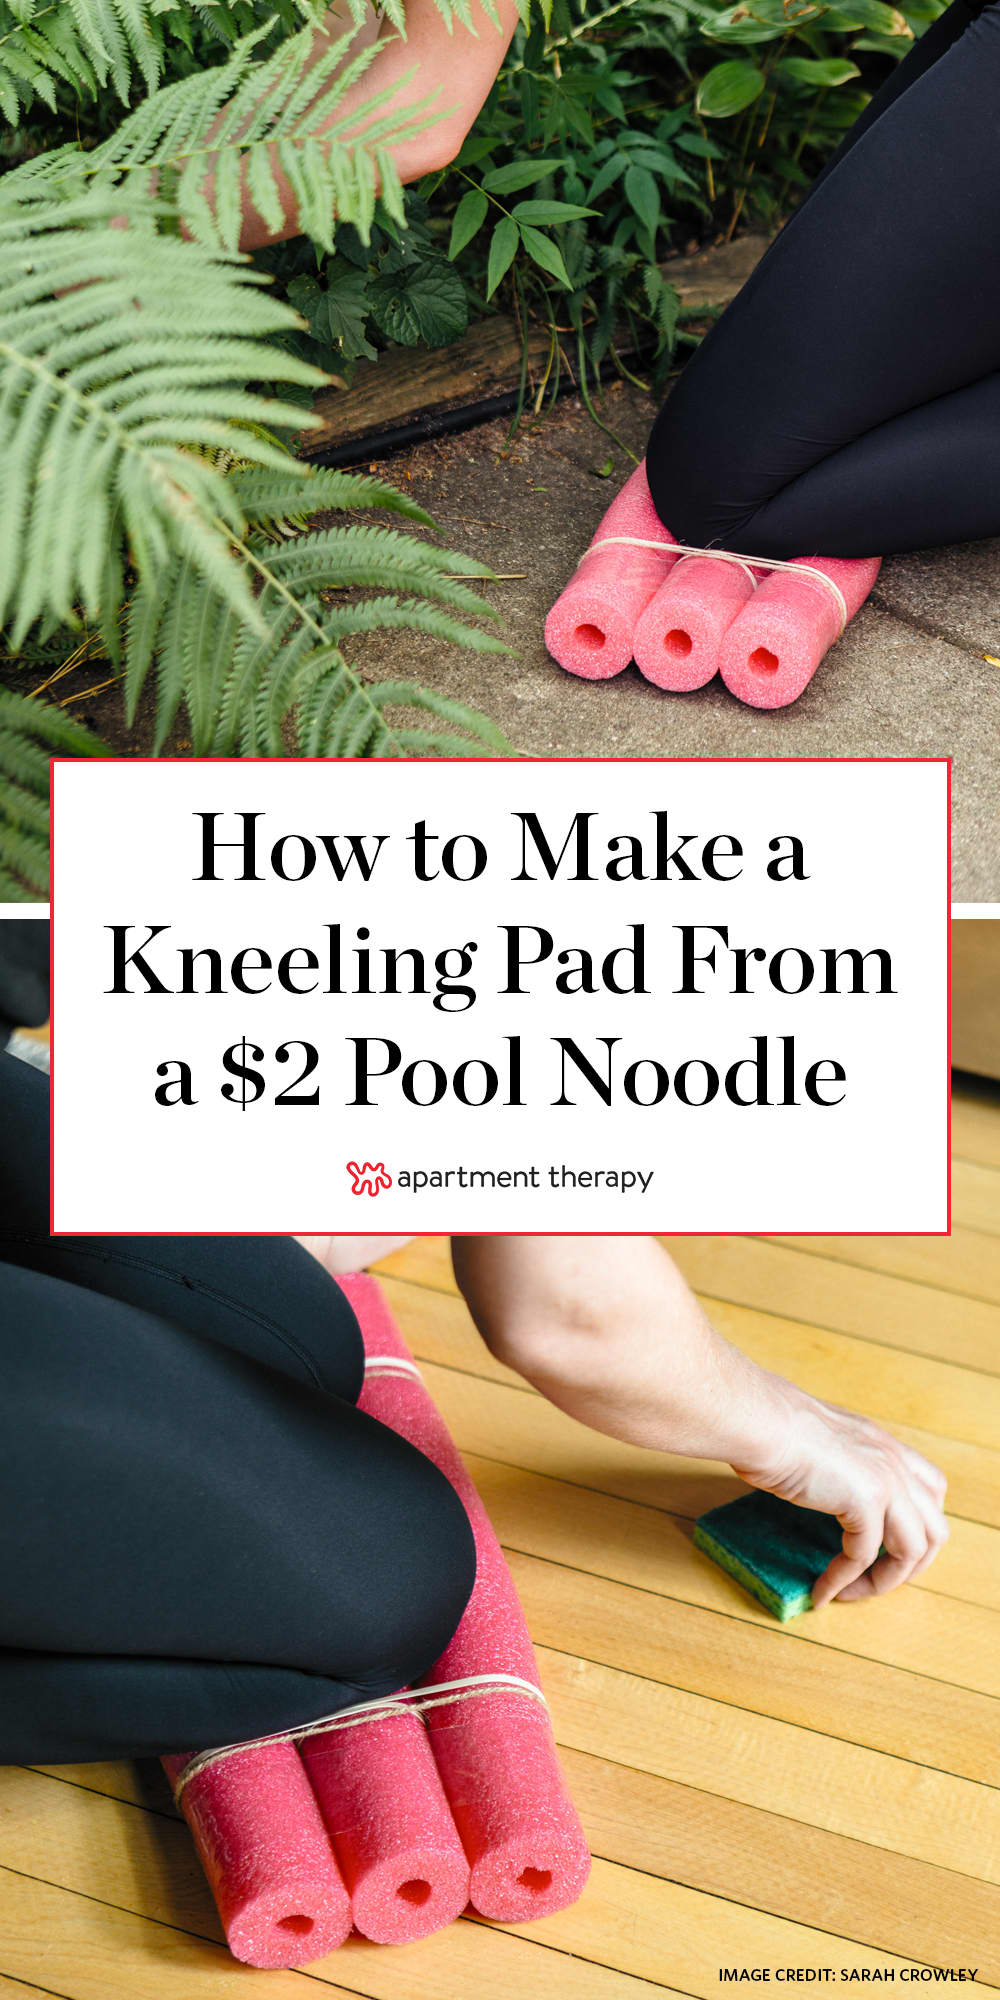 https://cdn.apartmenttherapy.info/image/upload/v1597168230/at/art/photo/2020-07/pool-noodles-cleaning/kneeling-pad-pool-noddle-diy.jpg